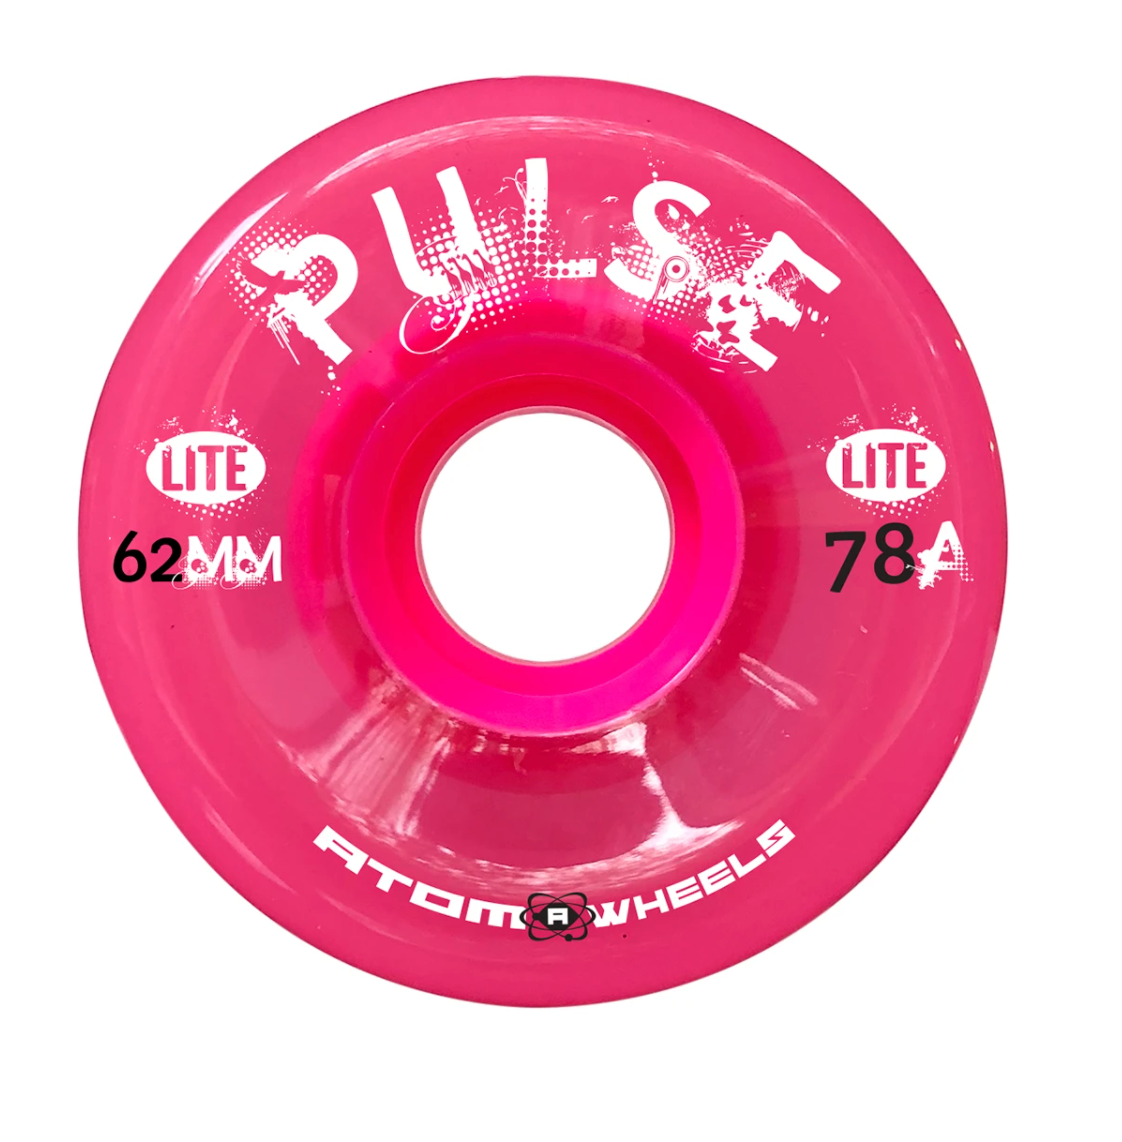 Atom Pulse Lite Outdoor Wheels 62MM 78A Pink